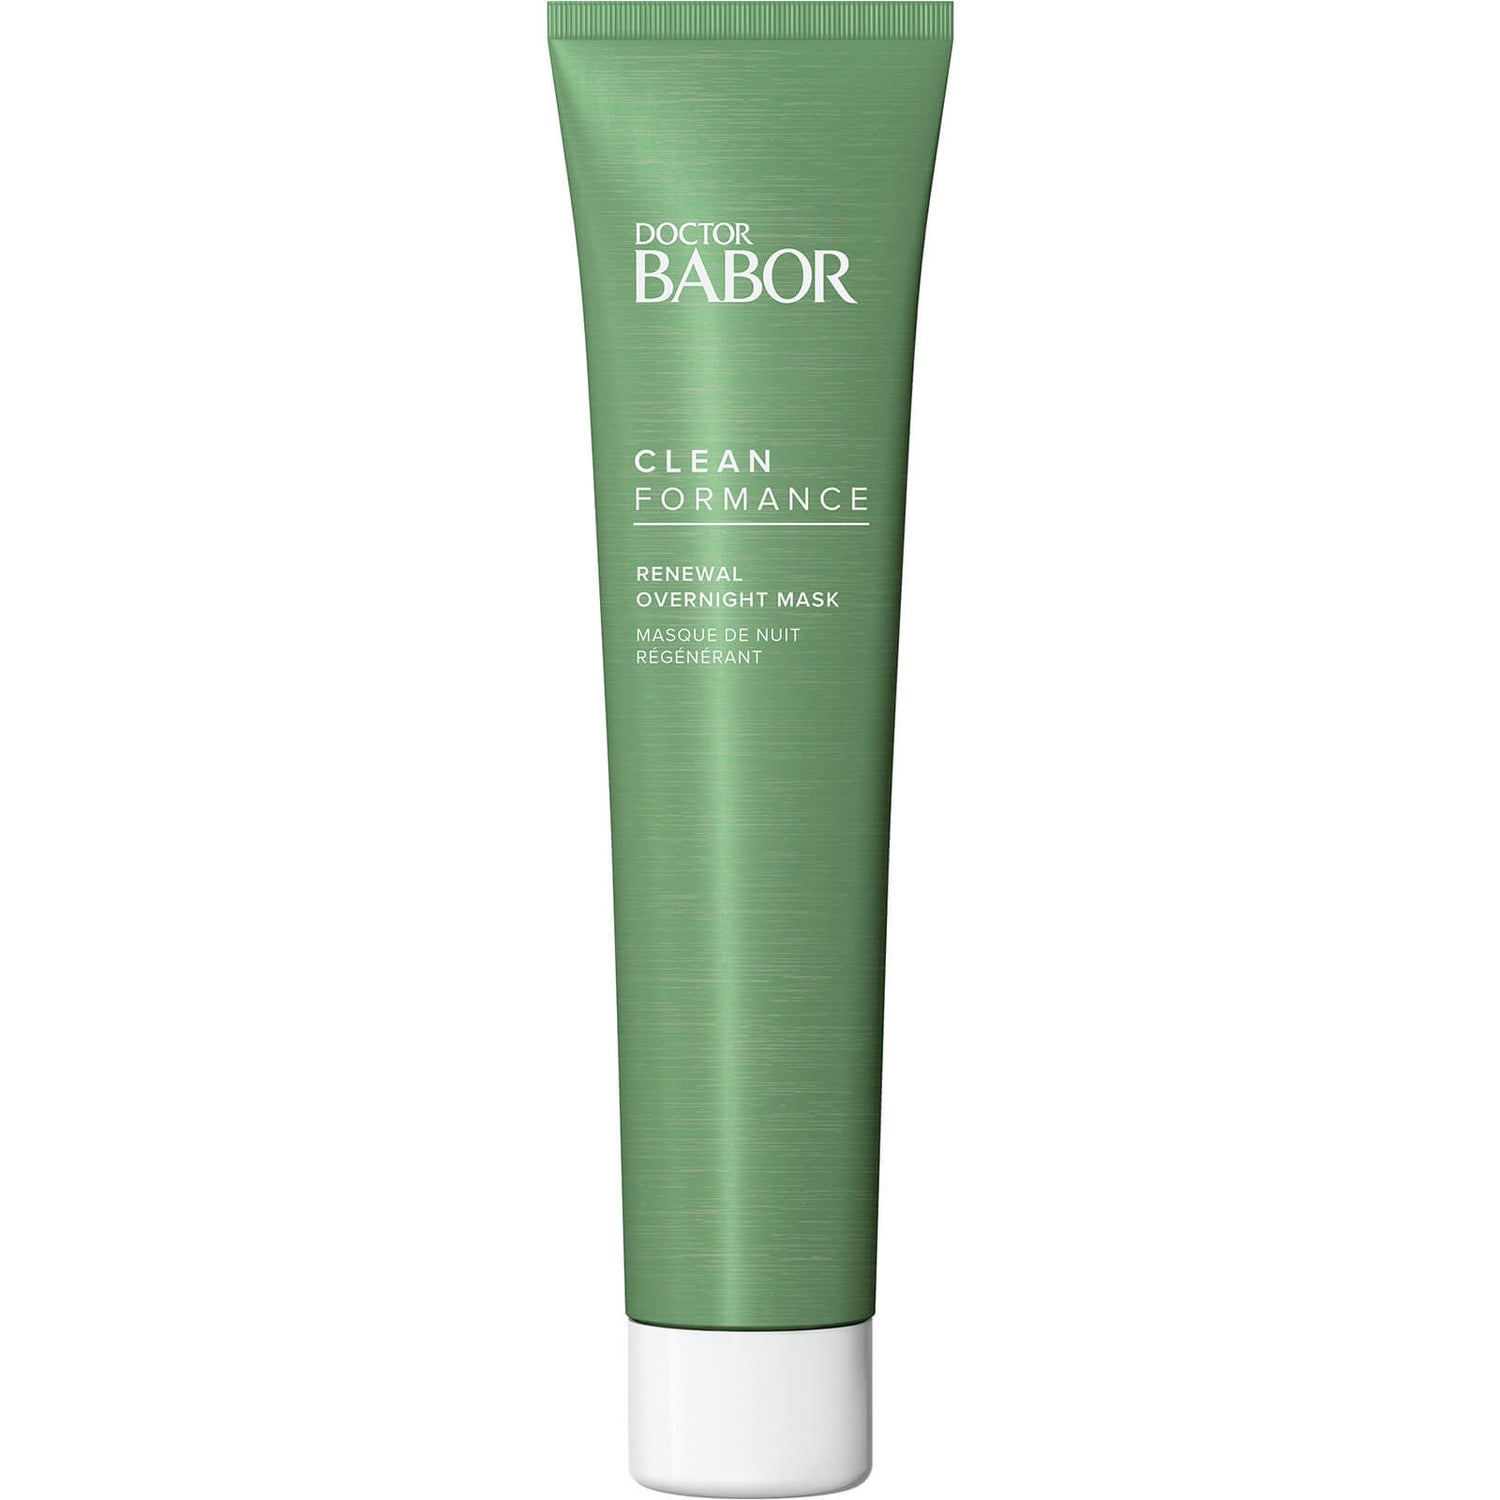 BABOR Doctor Babor Cleanformance Renewal Overnight Mask (75 ml.)